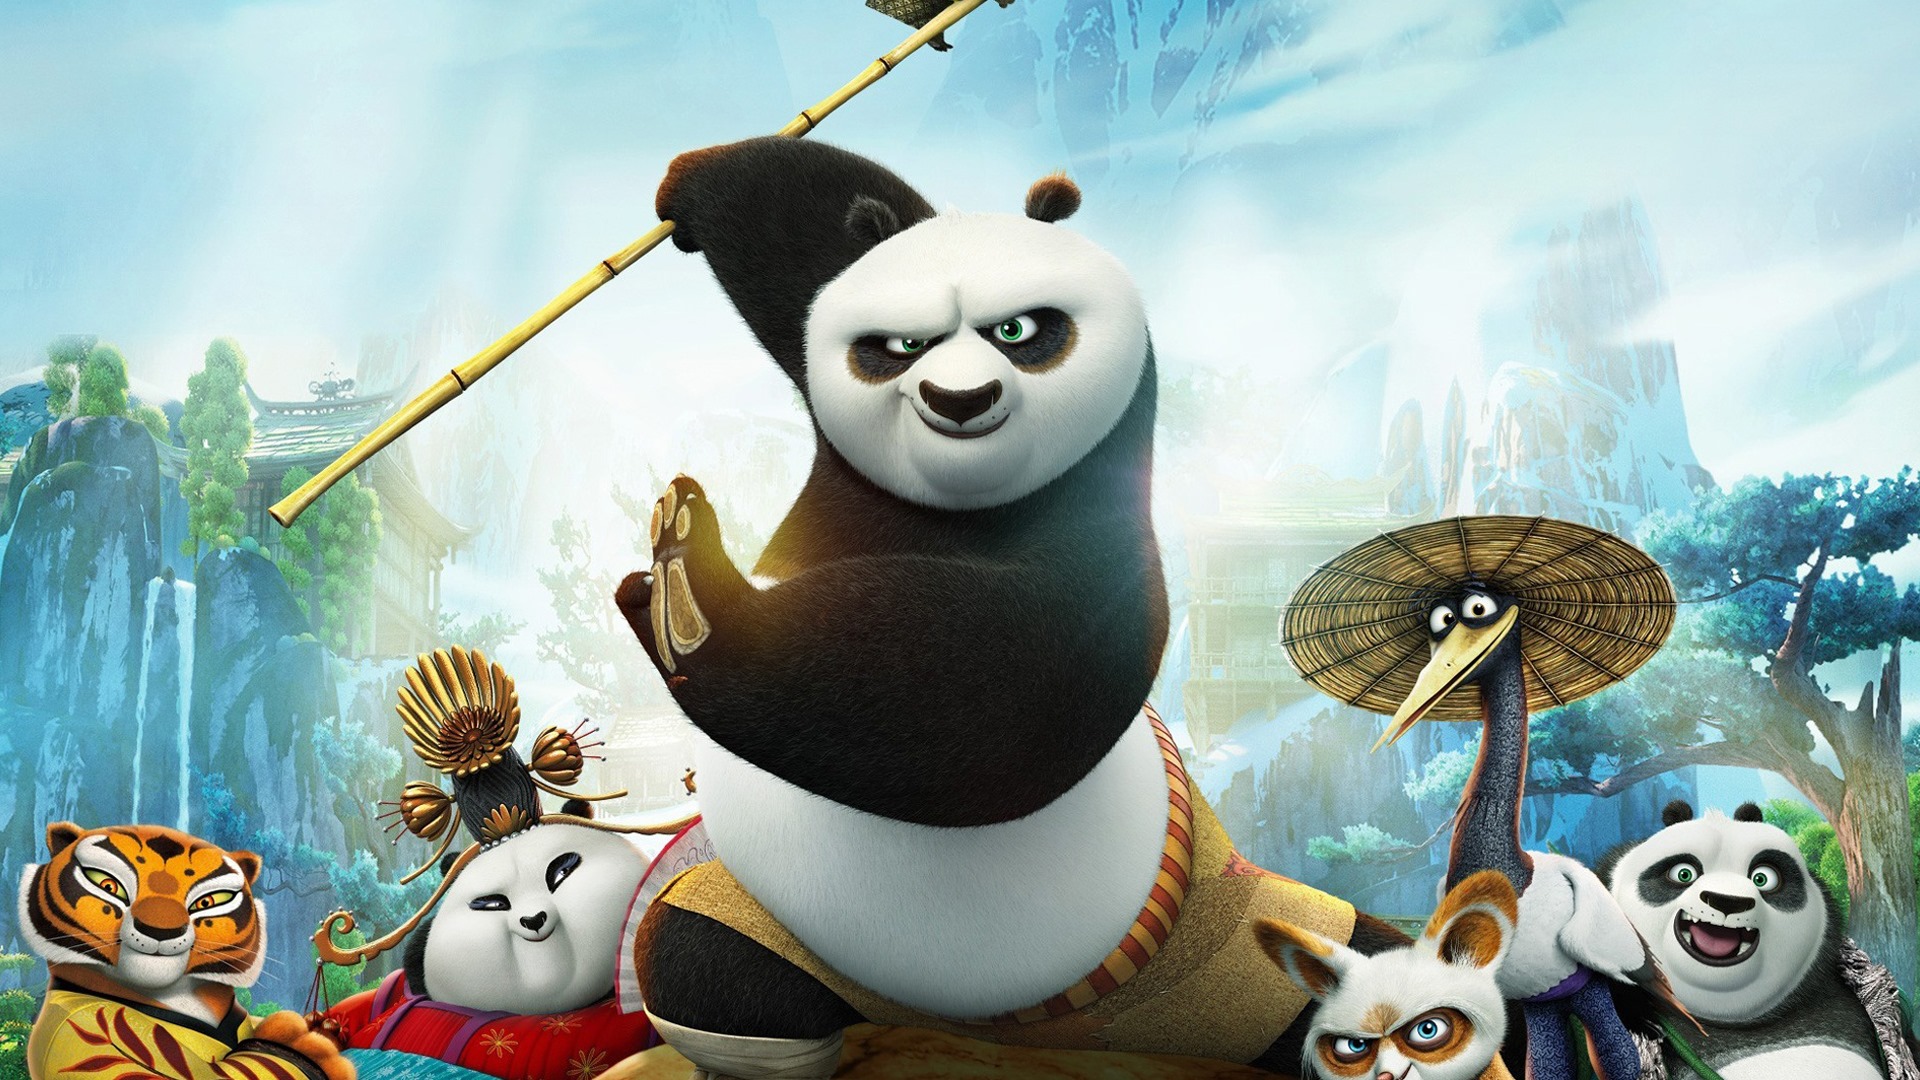 Kung Fu Panda 3, fondos de pantalla de alta definición de películas #1 - 1920x1080